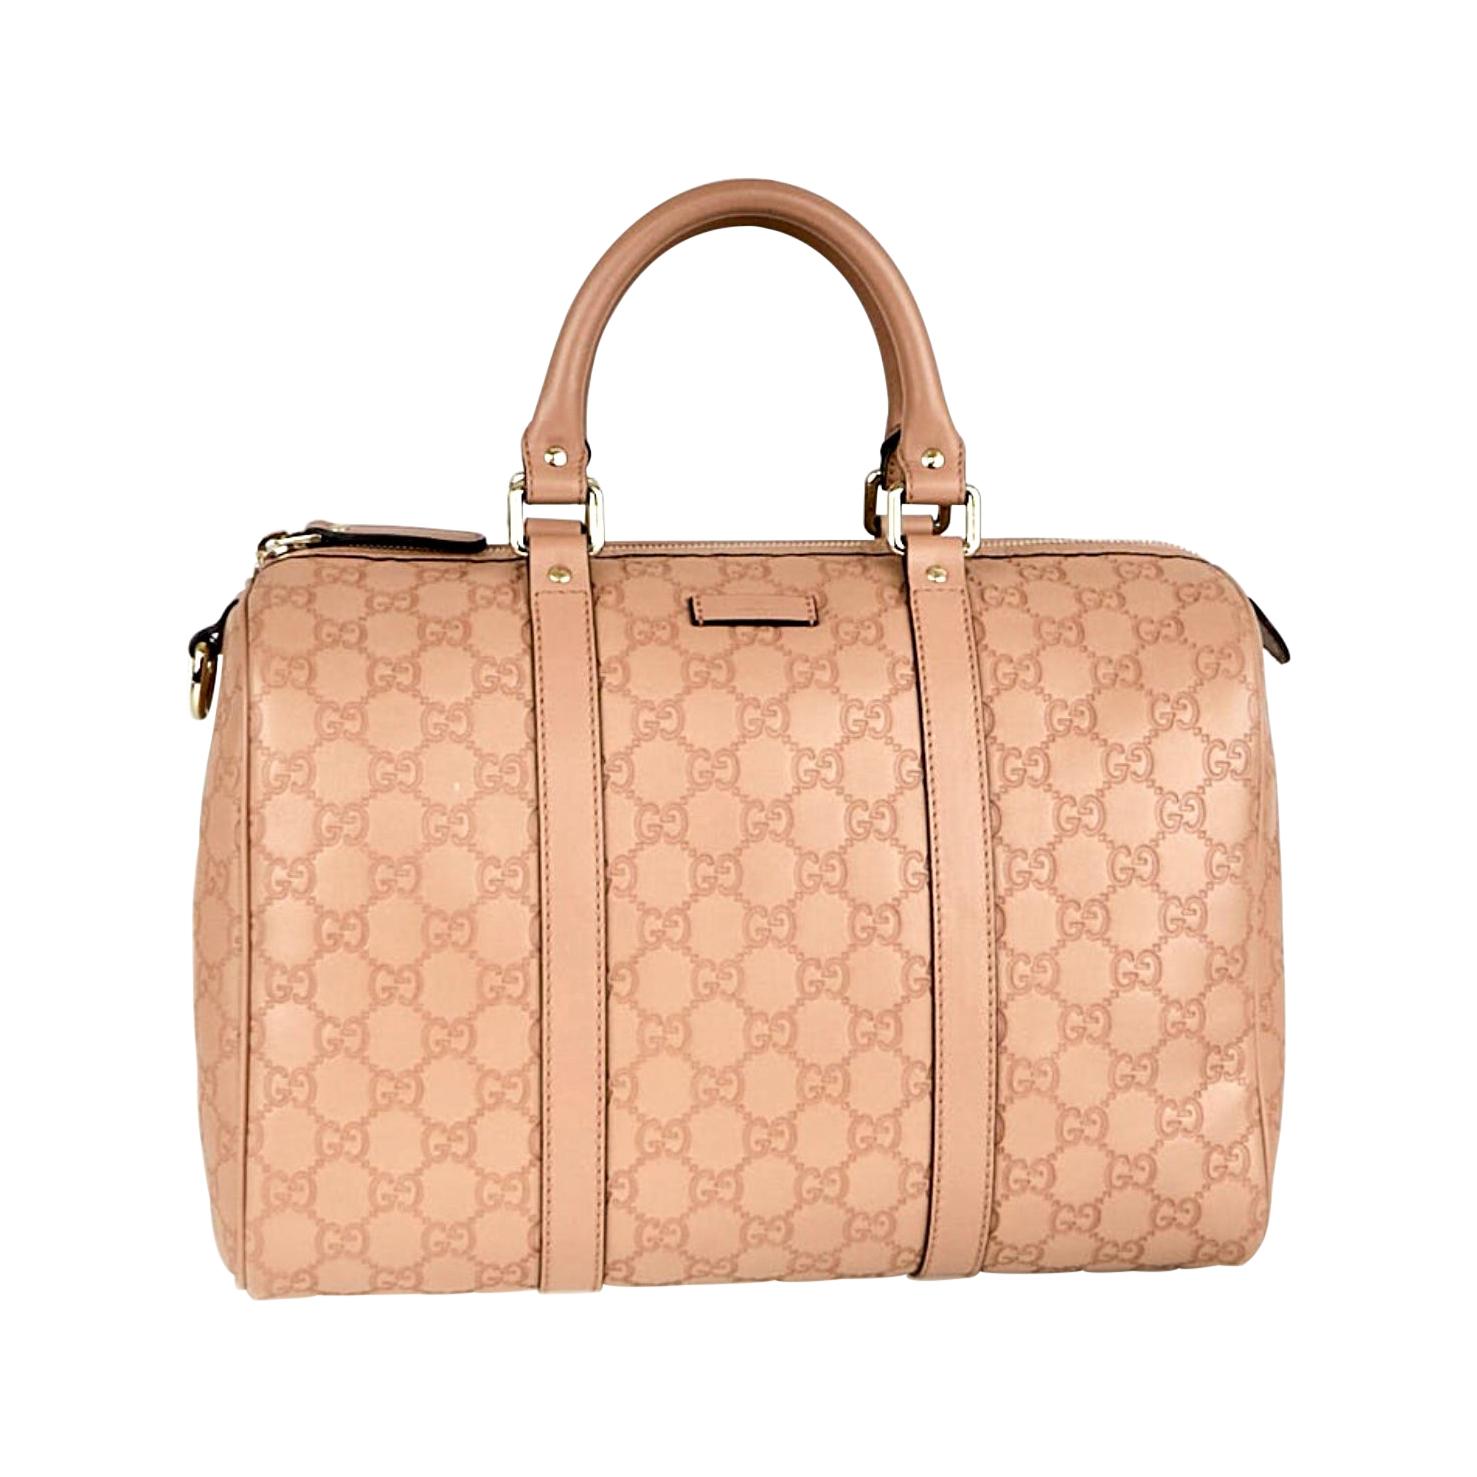 Gucci Joy Boston Satchel Guccissima  Leather Medium Rose/Pink Beige,Like New